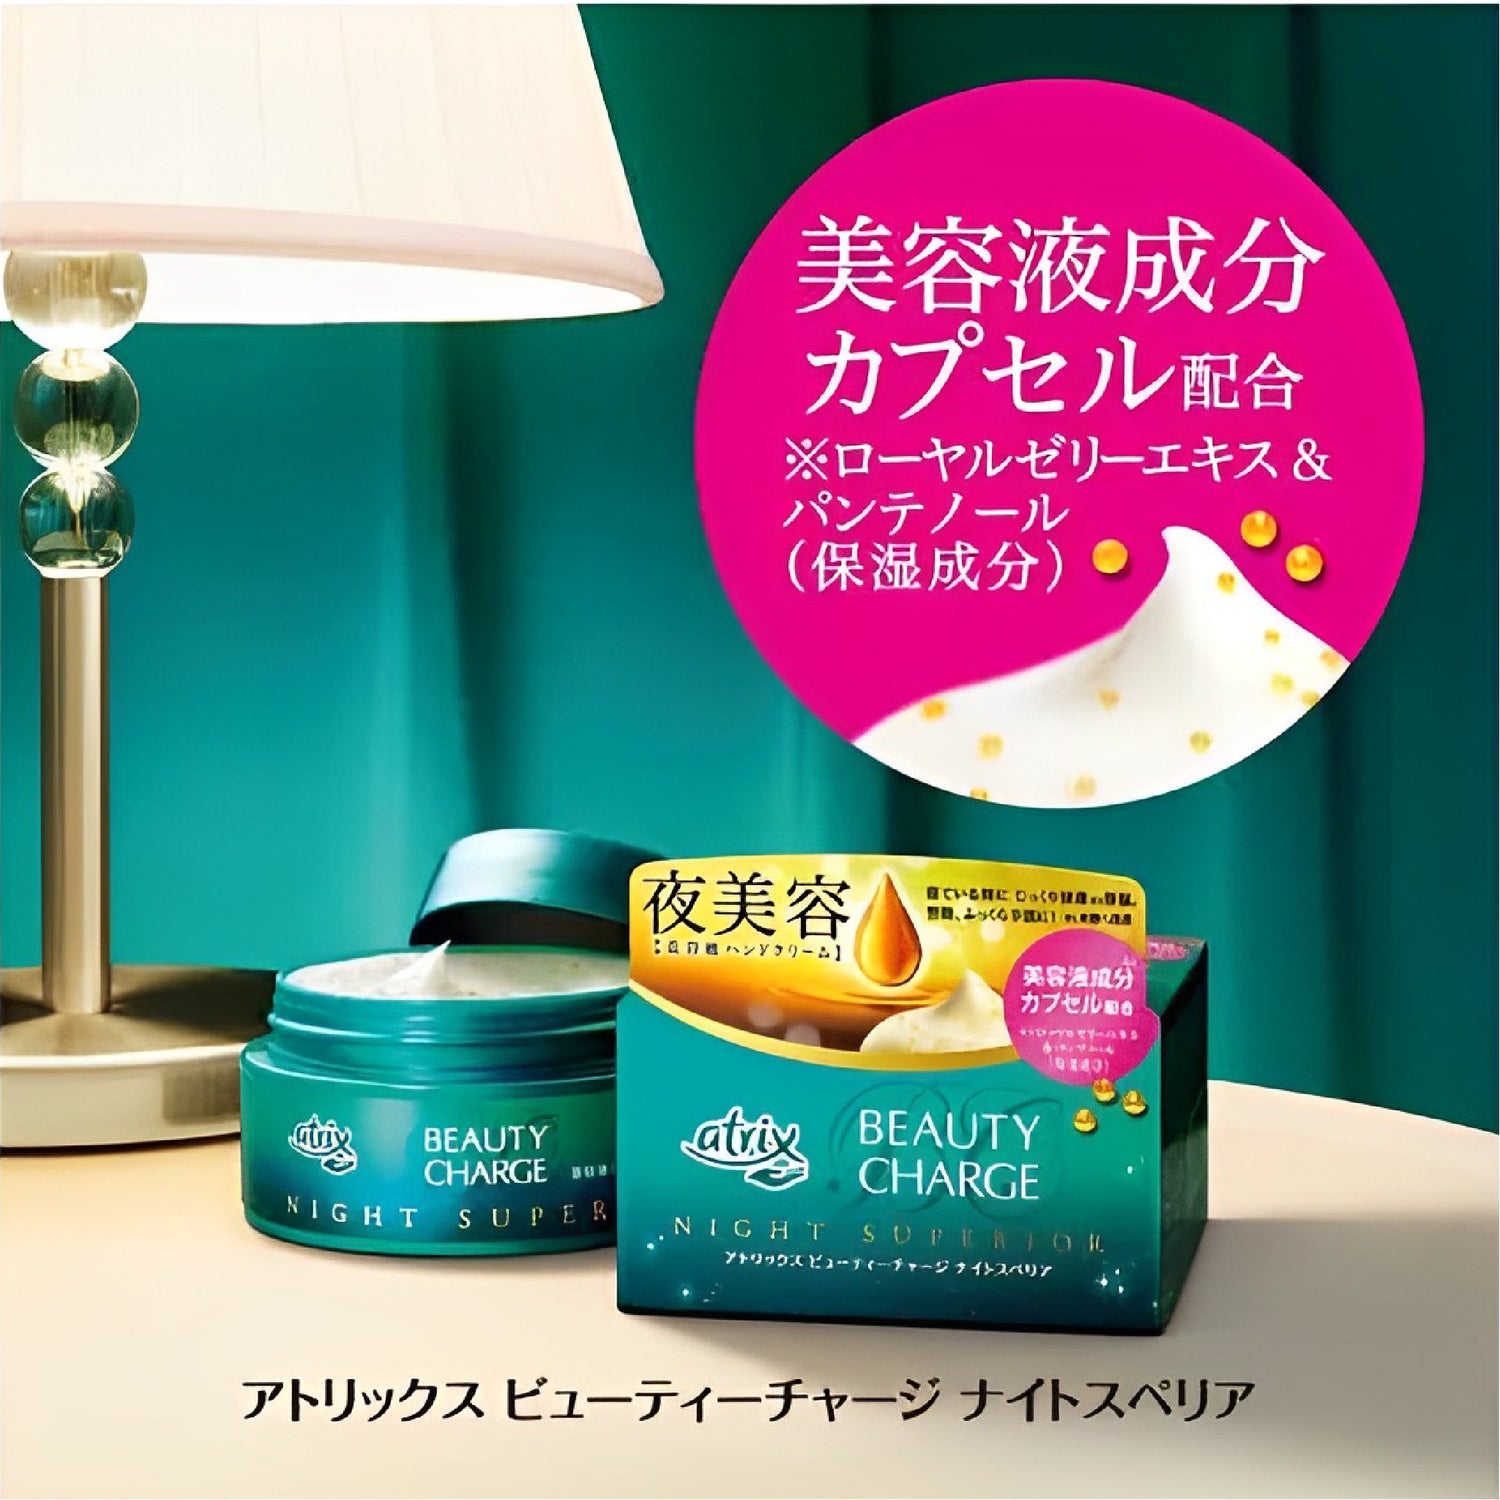 KAO Atrix Beauty Charge Night Superior Hand Cream 98g